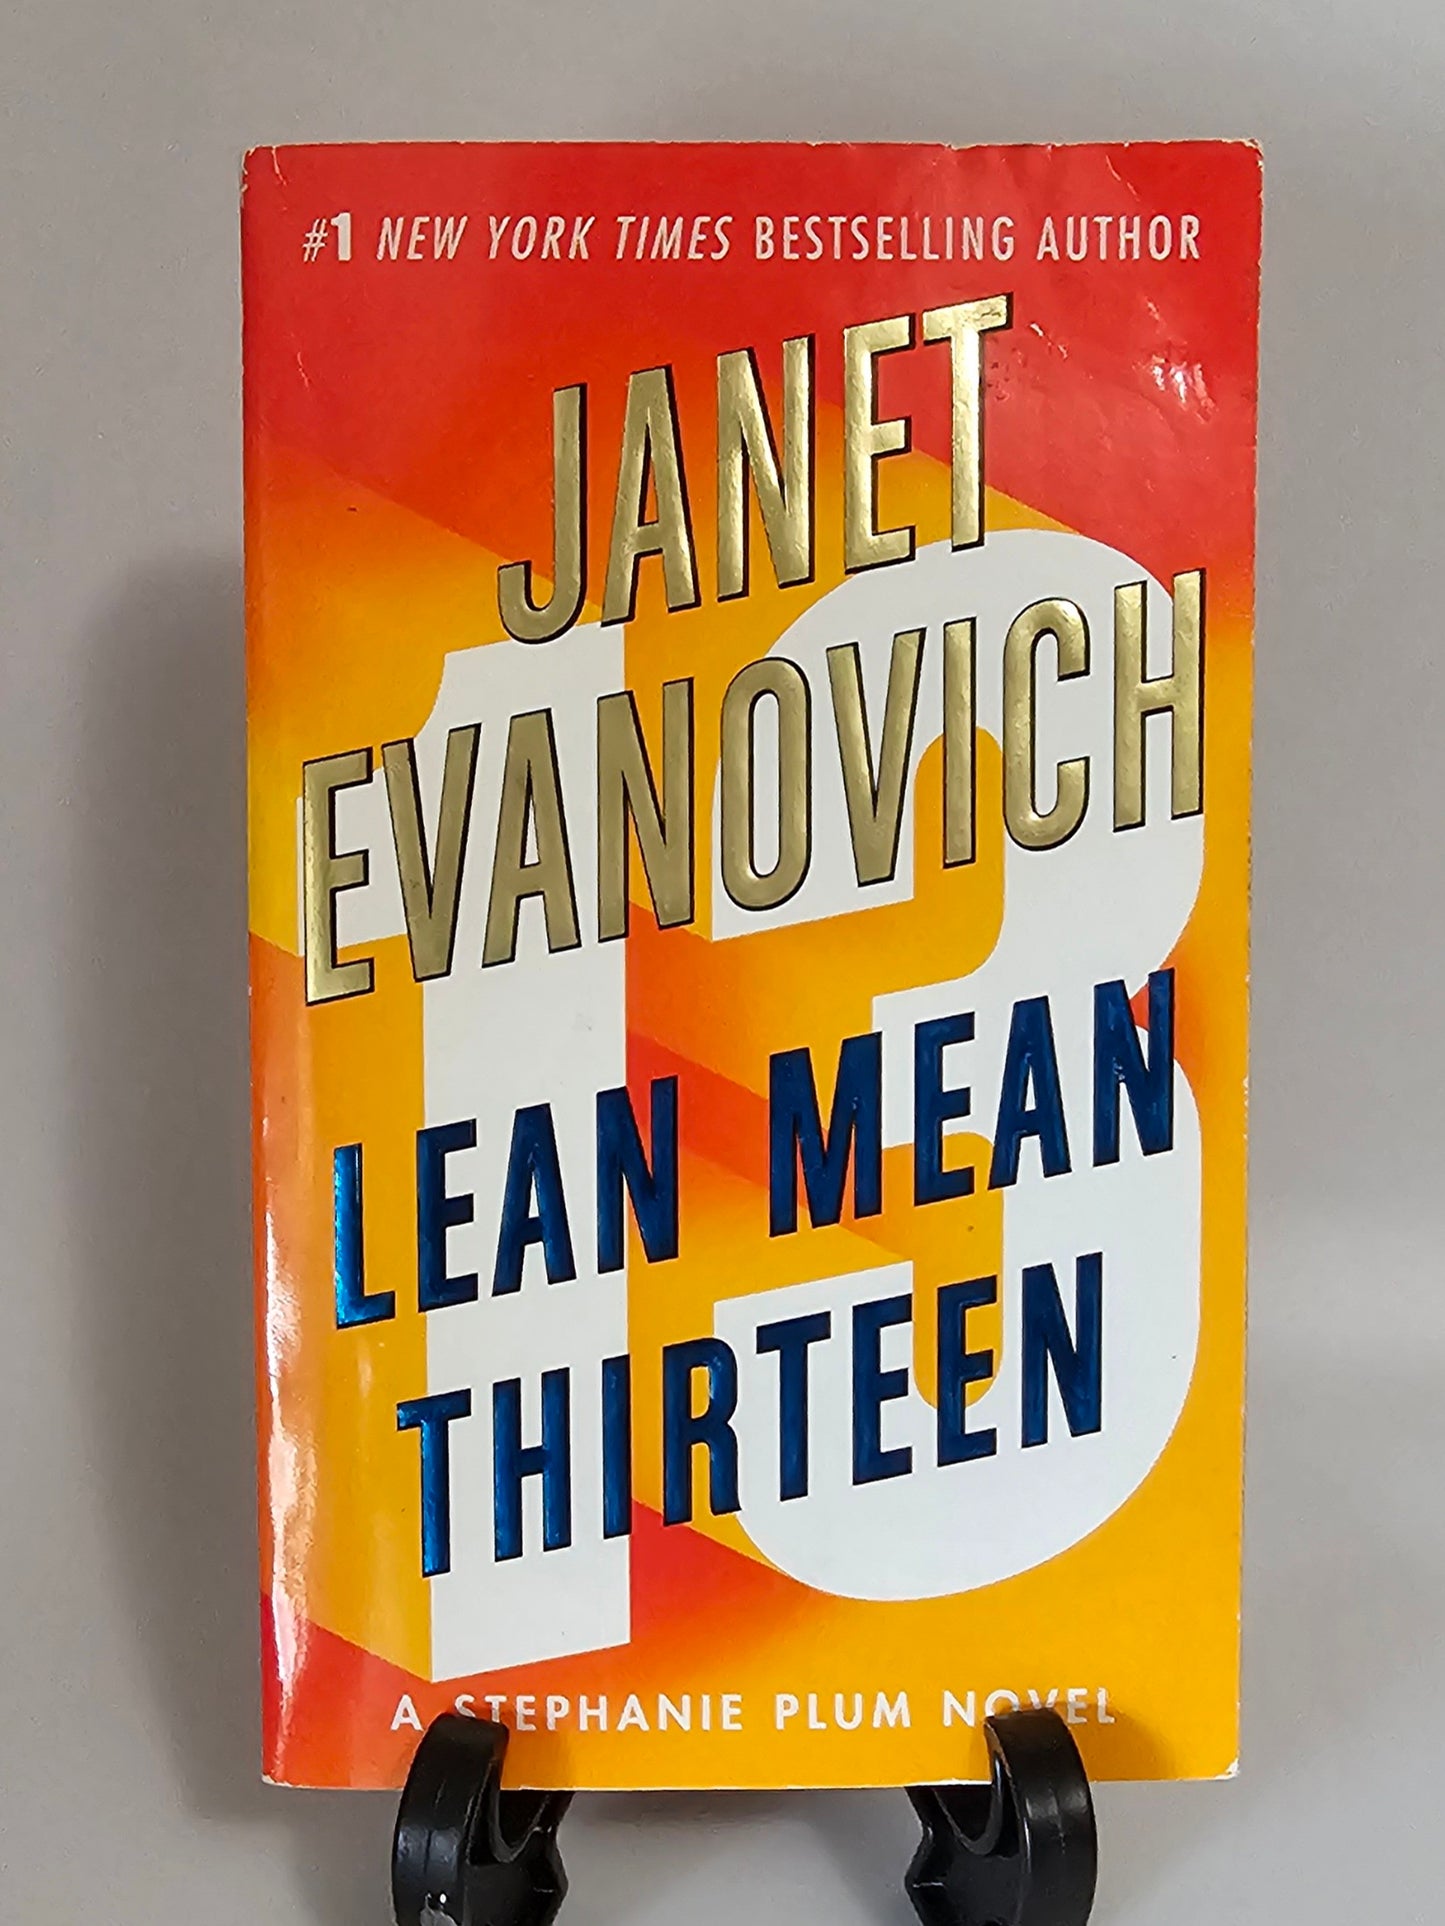 Lean Mean Thirteen by Janet Evanovich (Stephanie Plum #13)